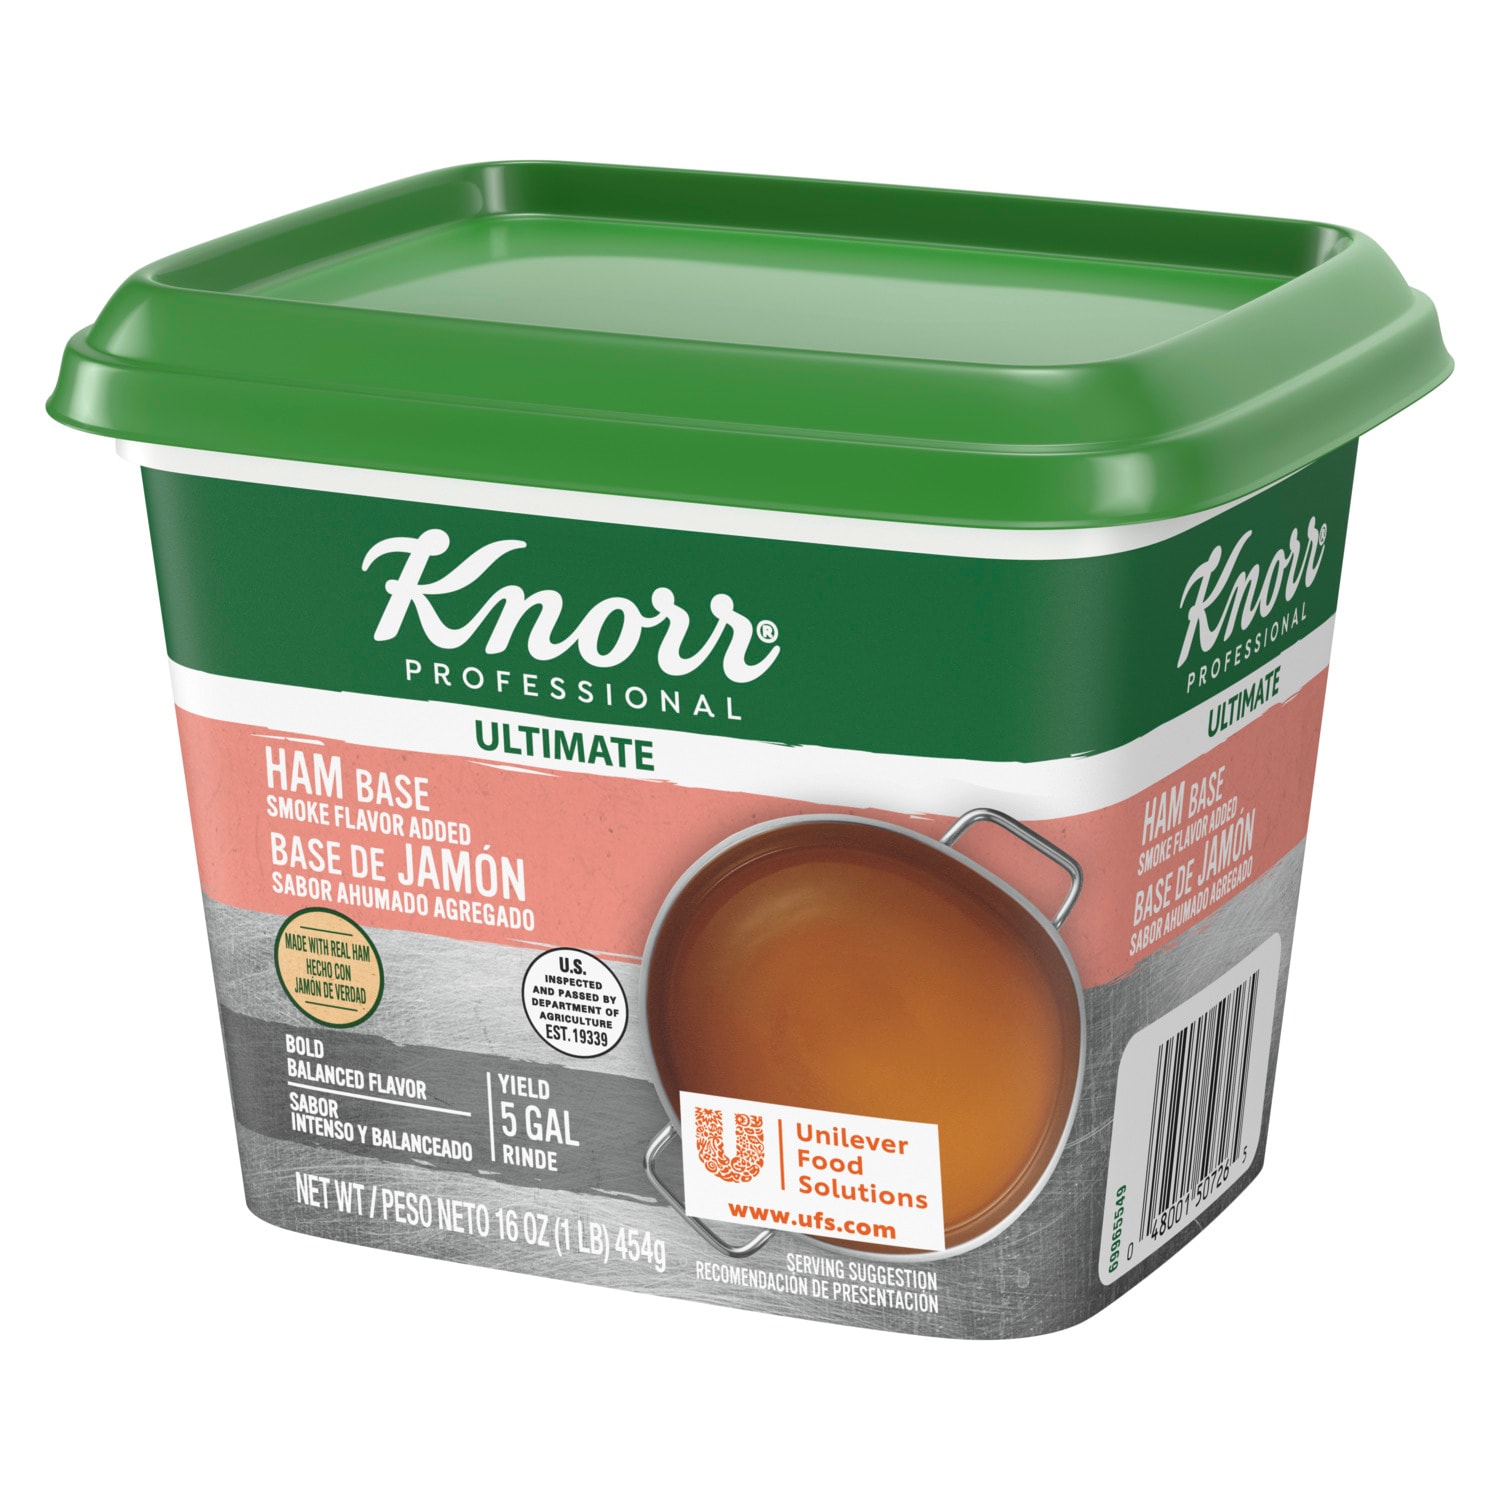 Knorr Professional Ultimate Ham Paste Bouillon Base 6 x 1 lb